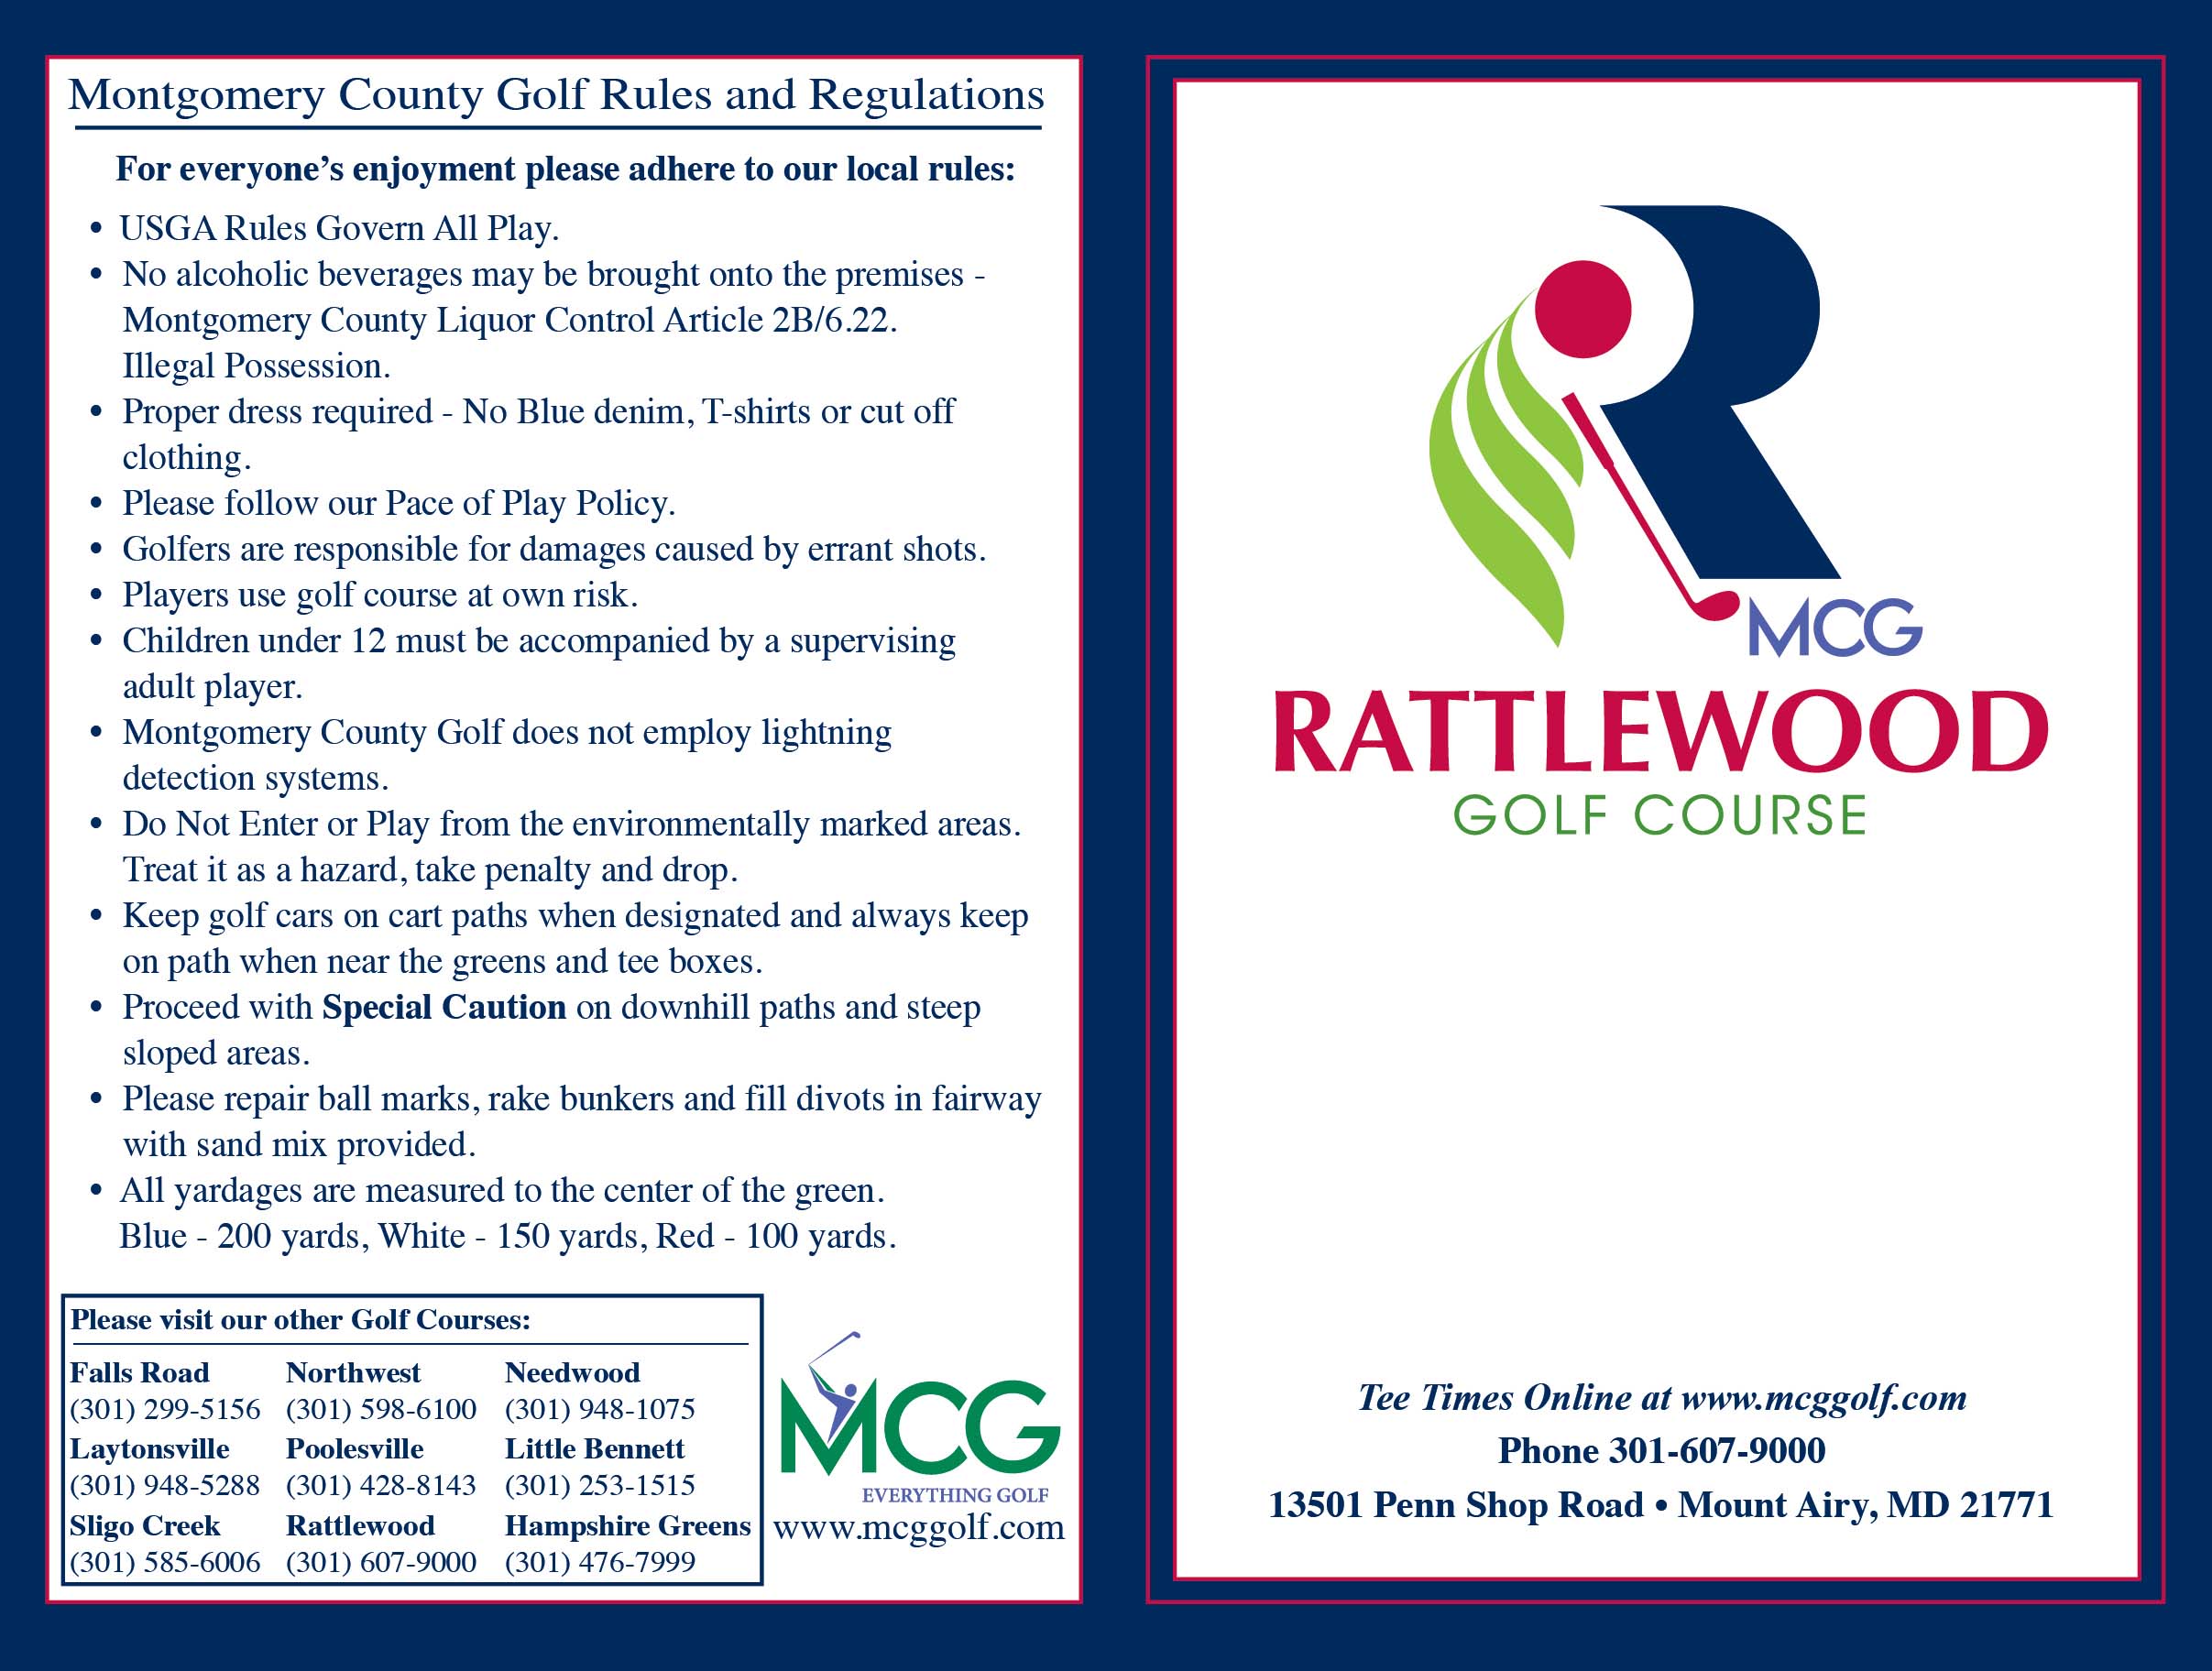 Rattlewood GC